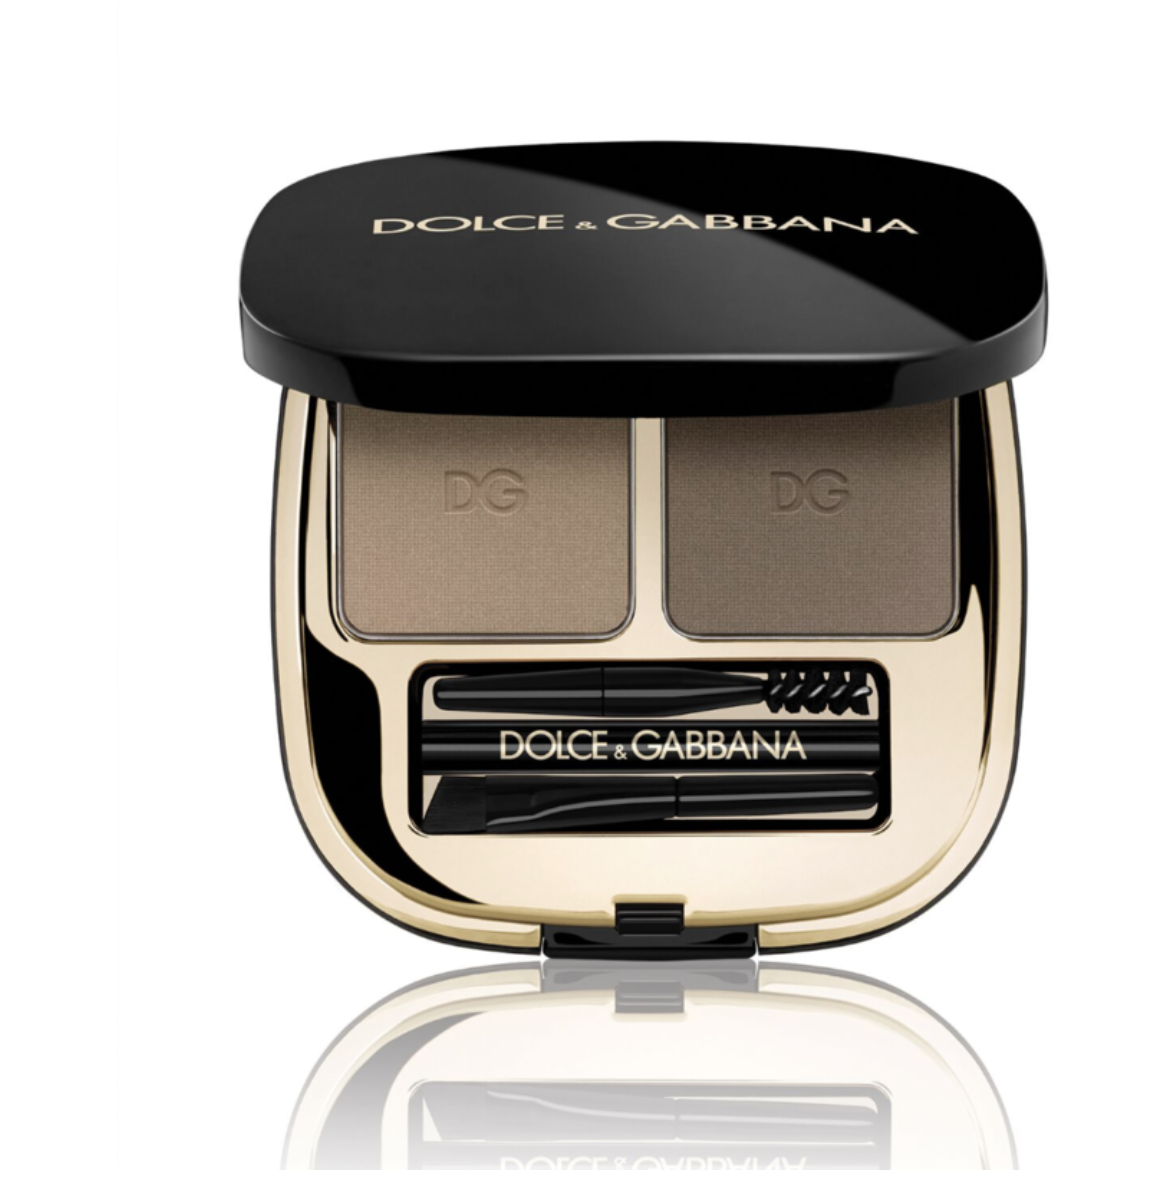 Dolce & Gabbana Emotioneyes Brow Powder Duo 雙色眉粉